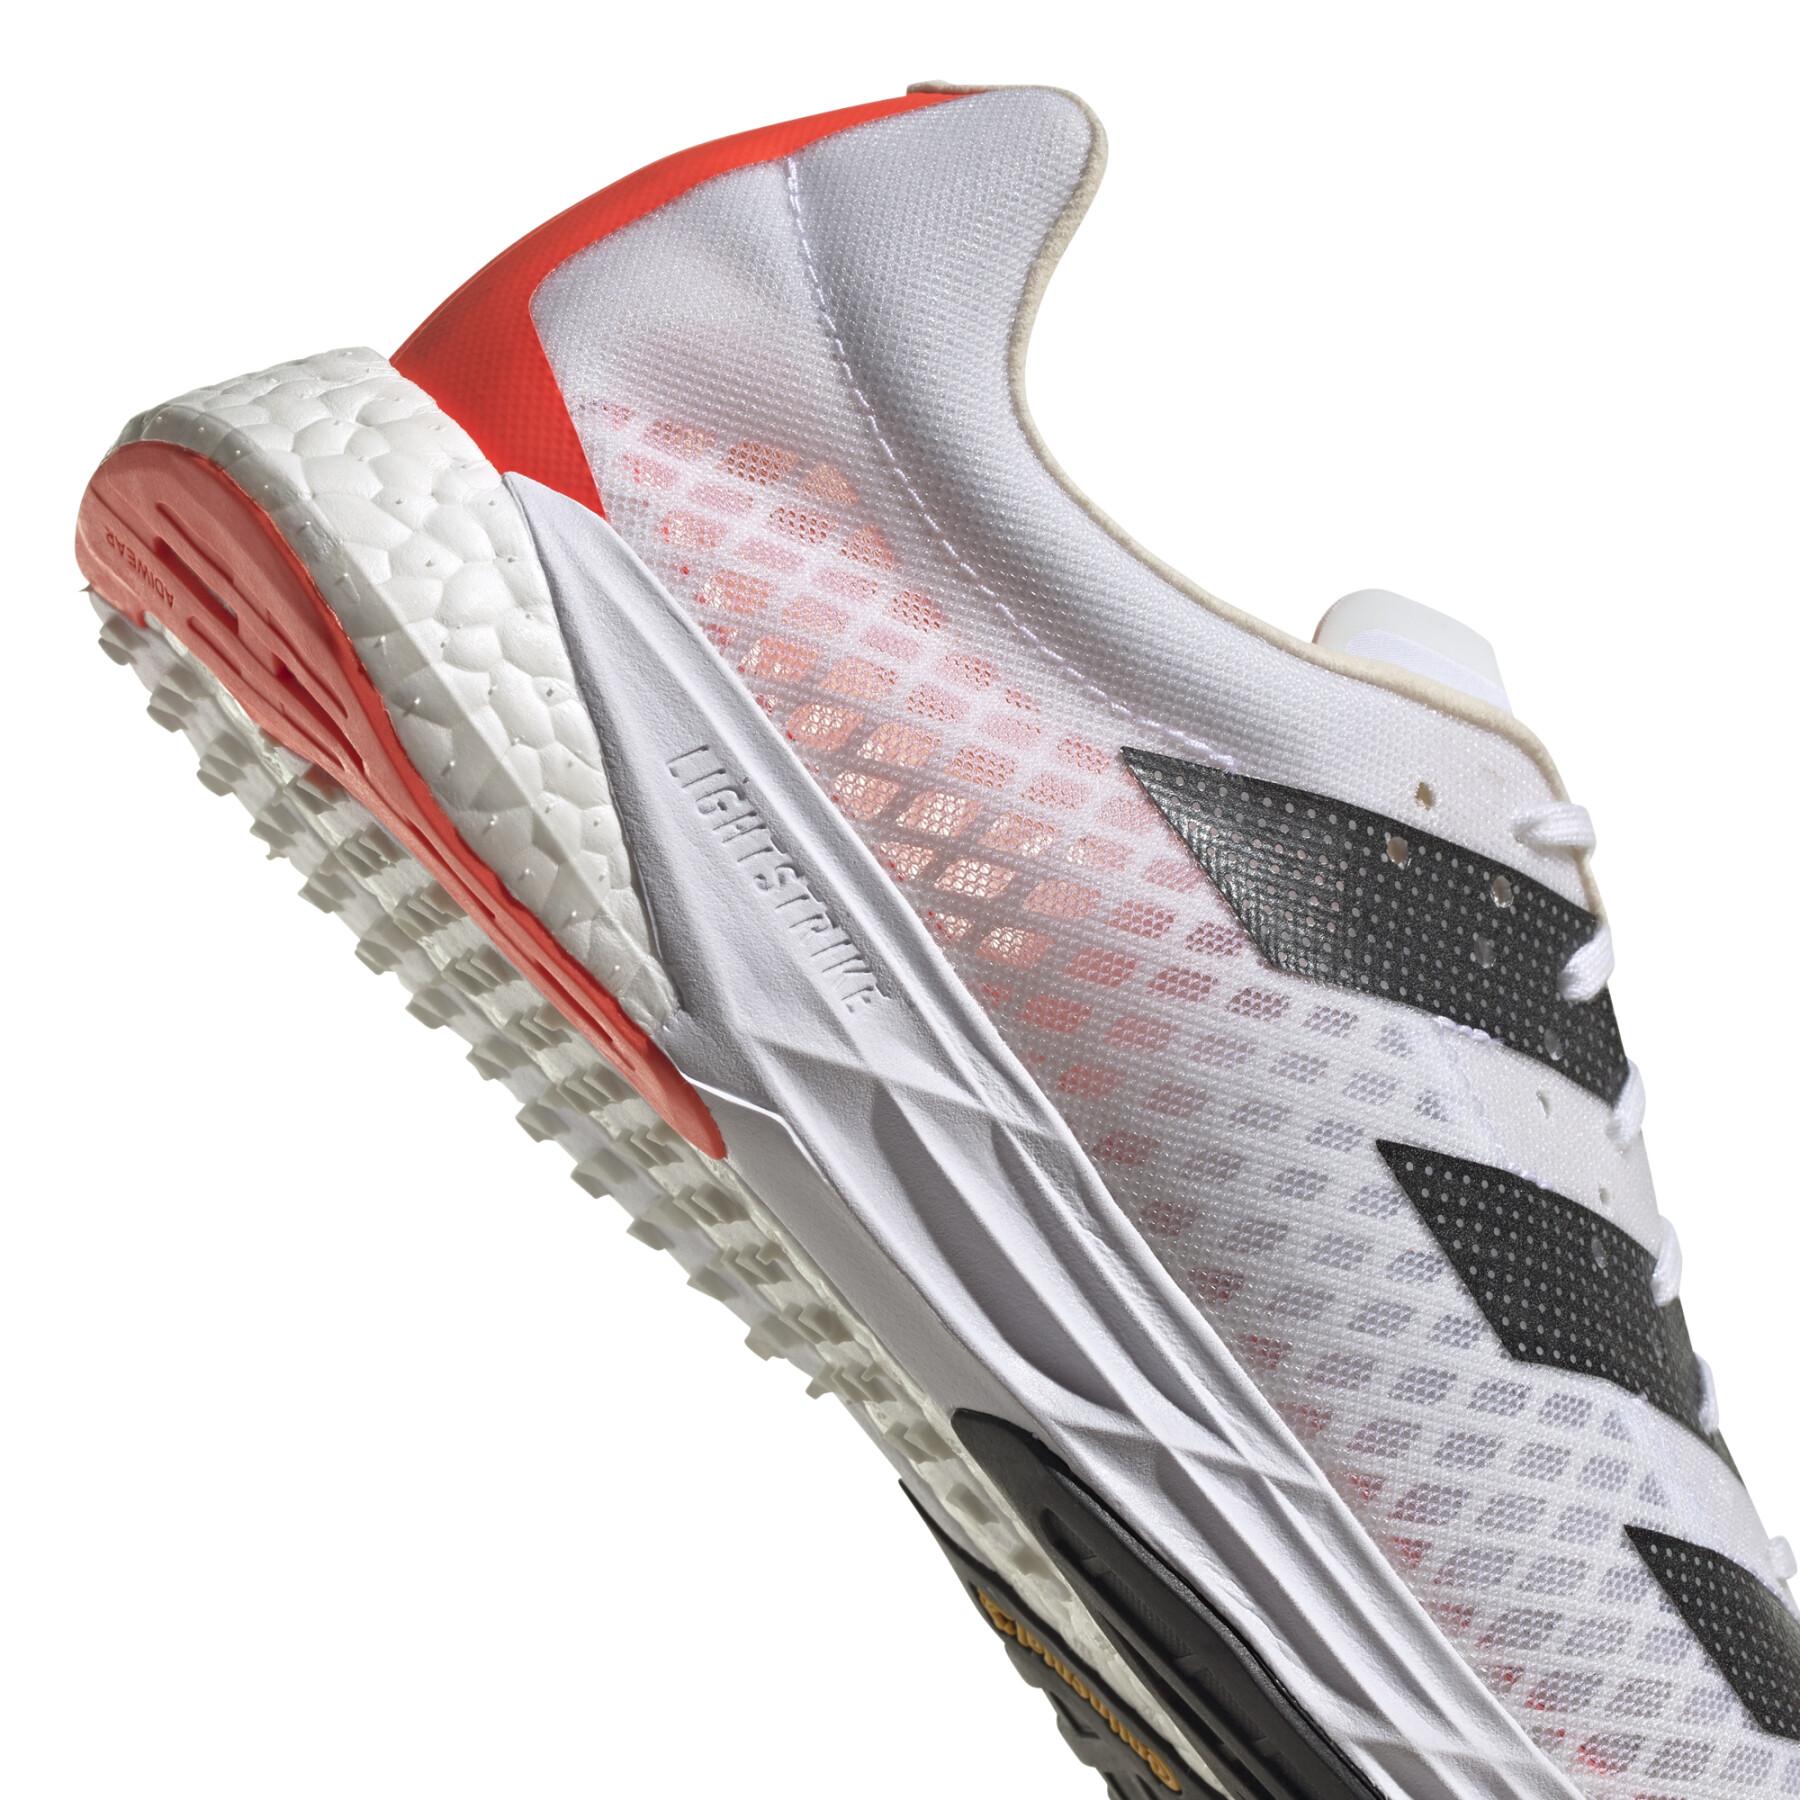 Running shoes adidas Adizero Pro